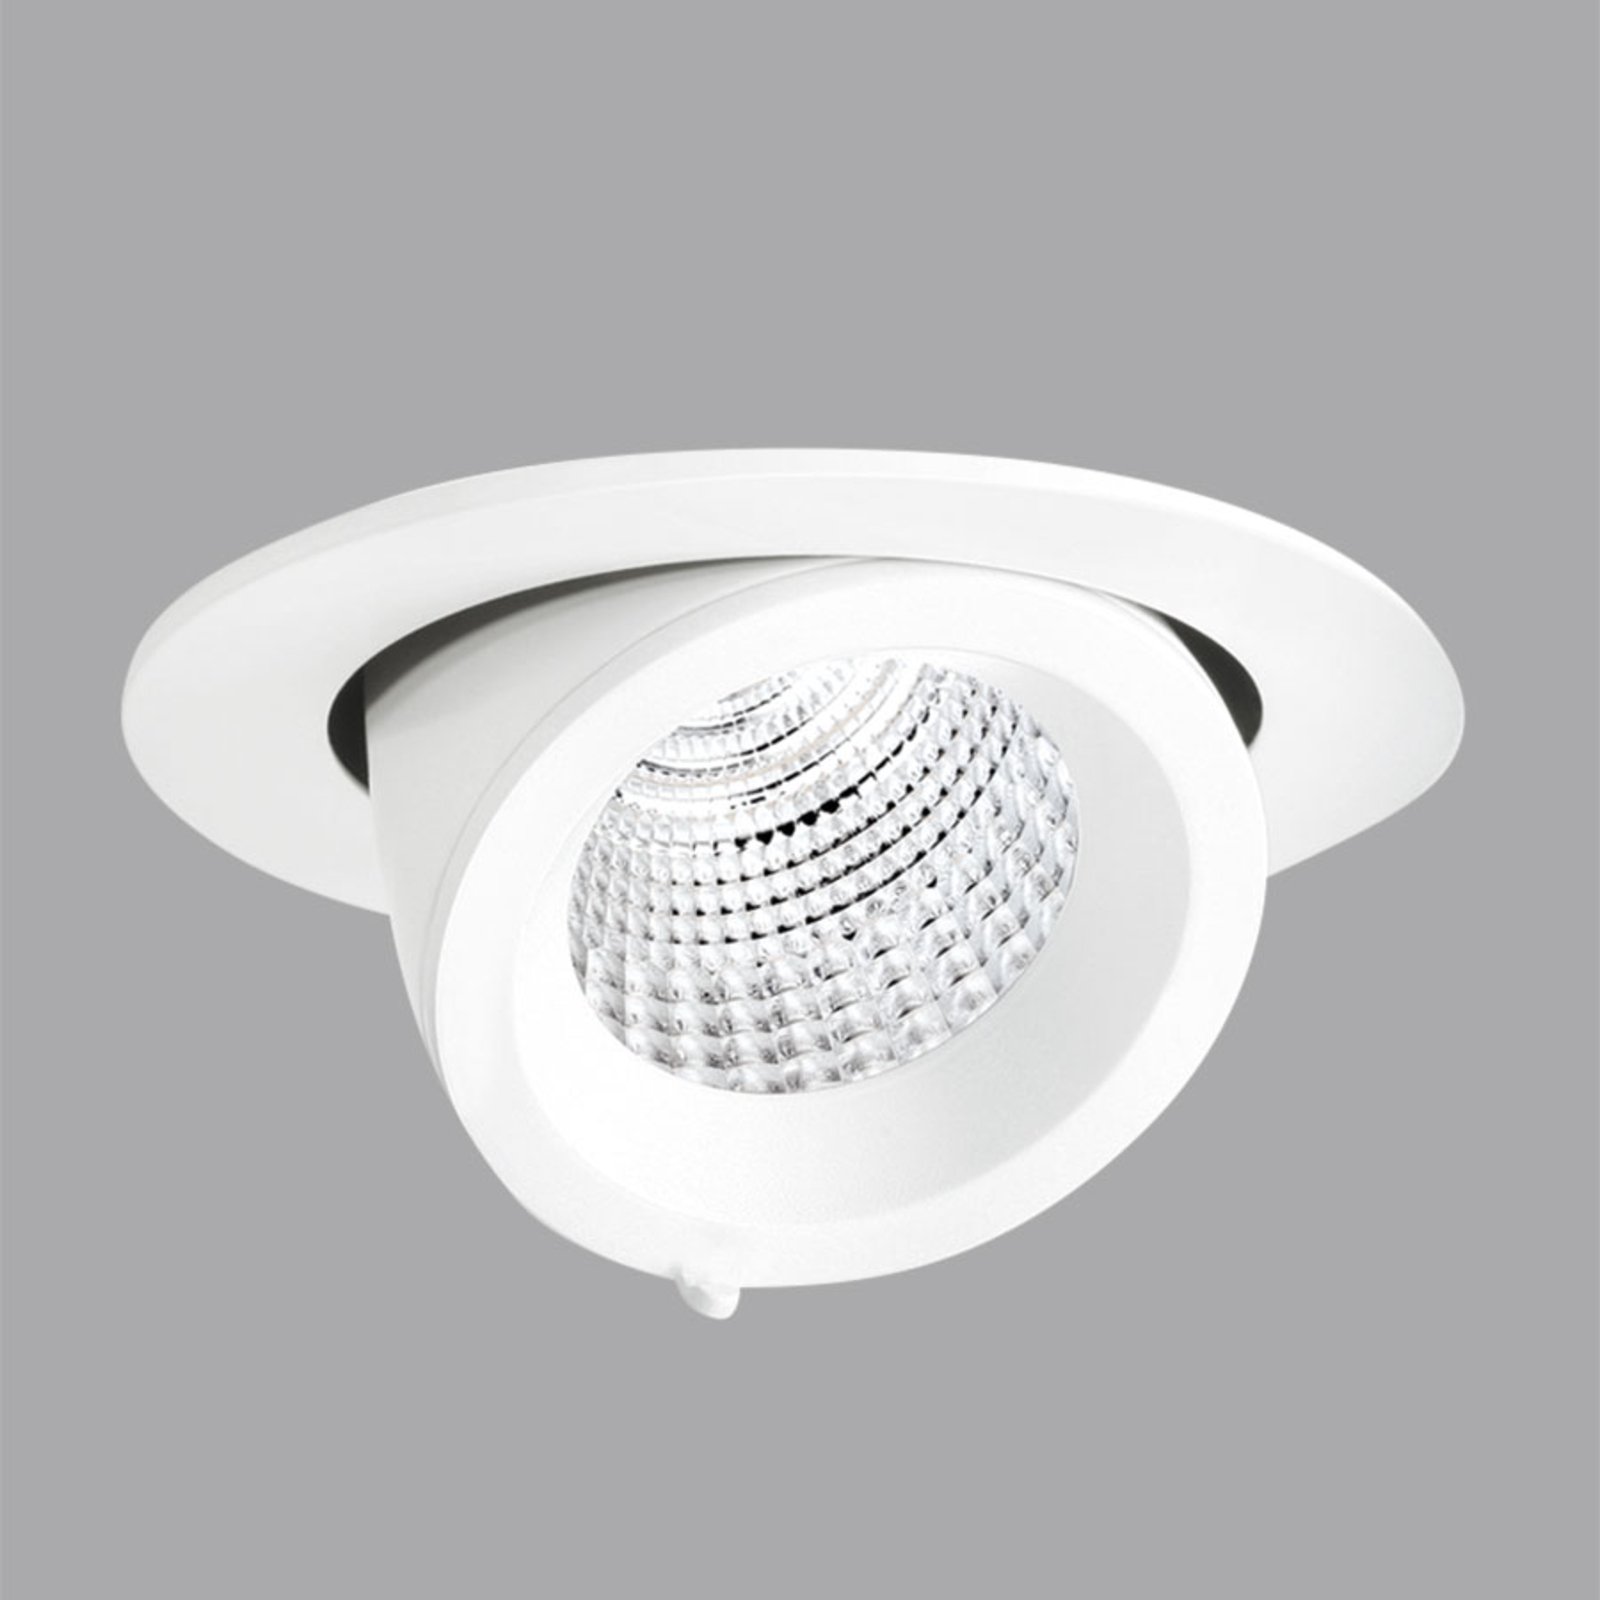 EB431 downlight LED spot reflector white 4,000 K